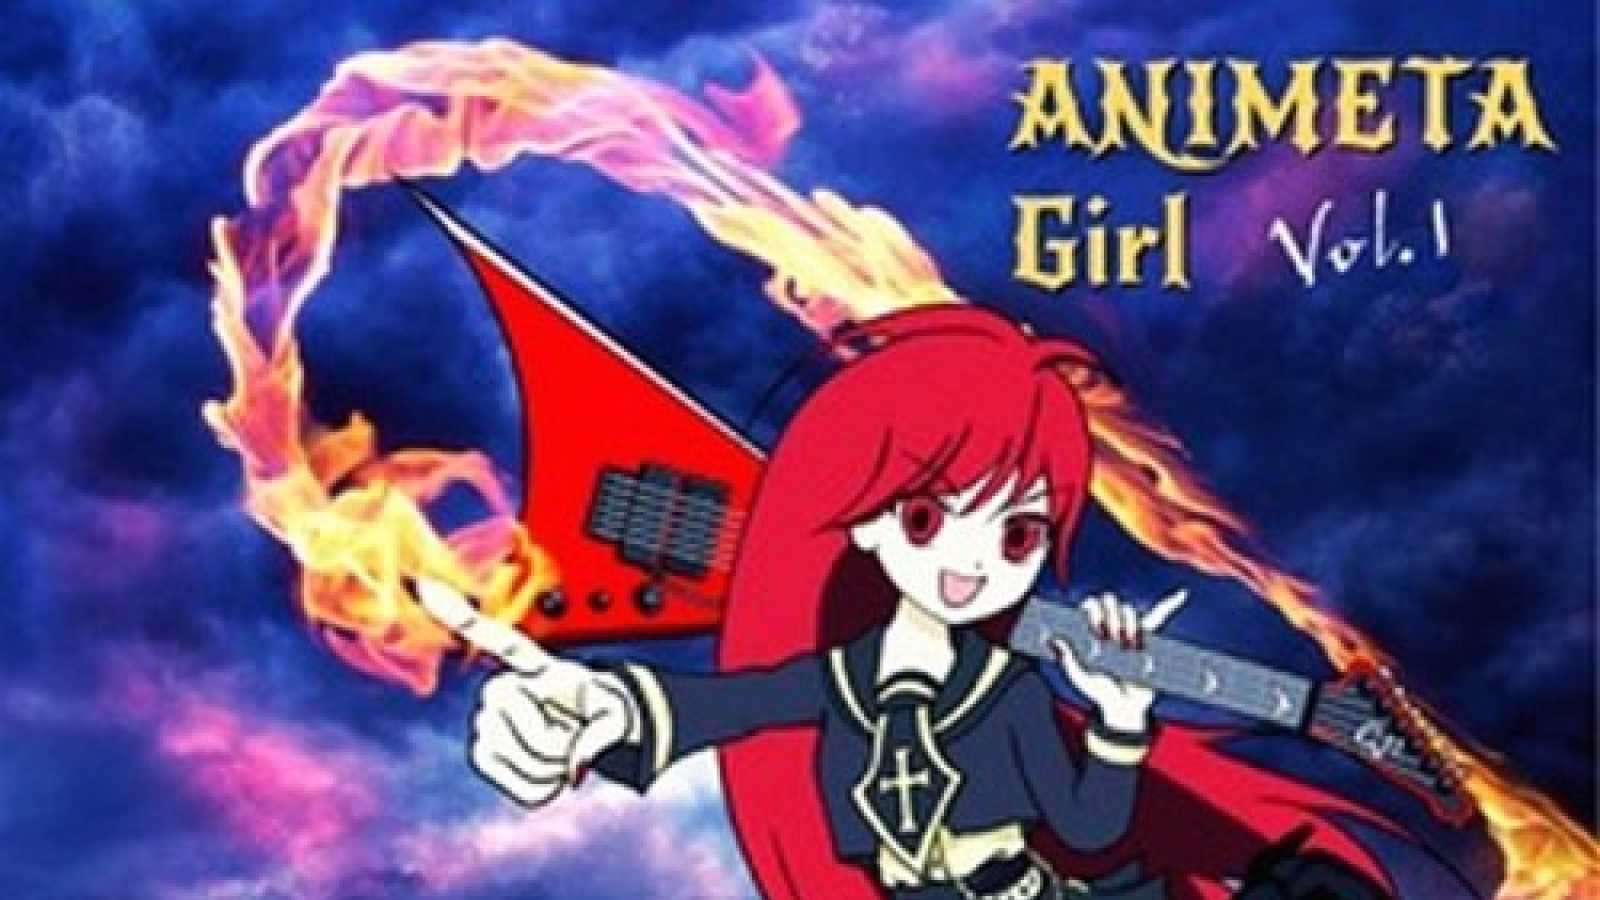 ANIMETA Girl - ANIMETA Girl Vol.1 © Tengusakura. All rights reserved.